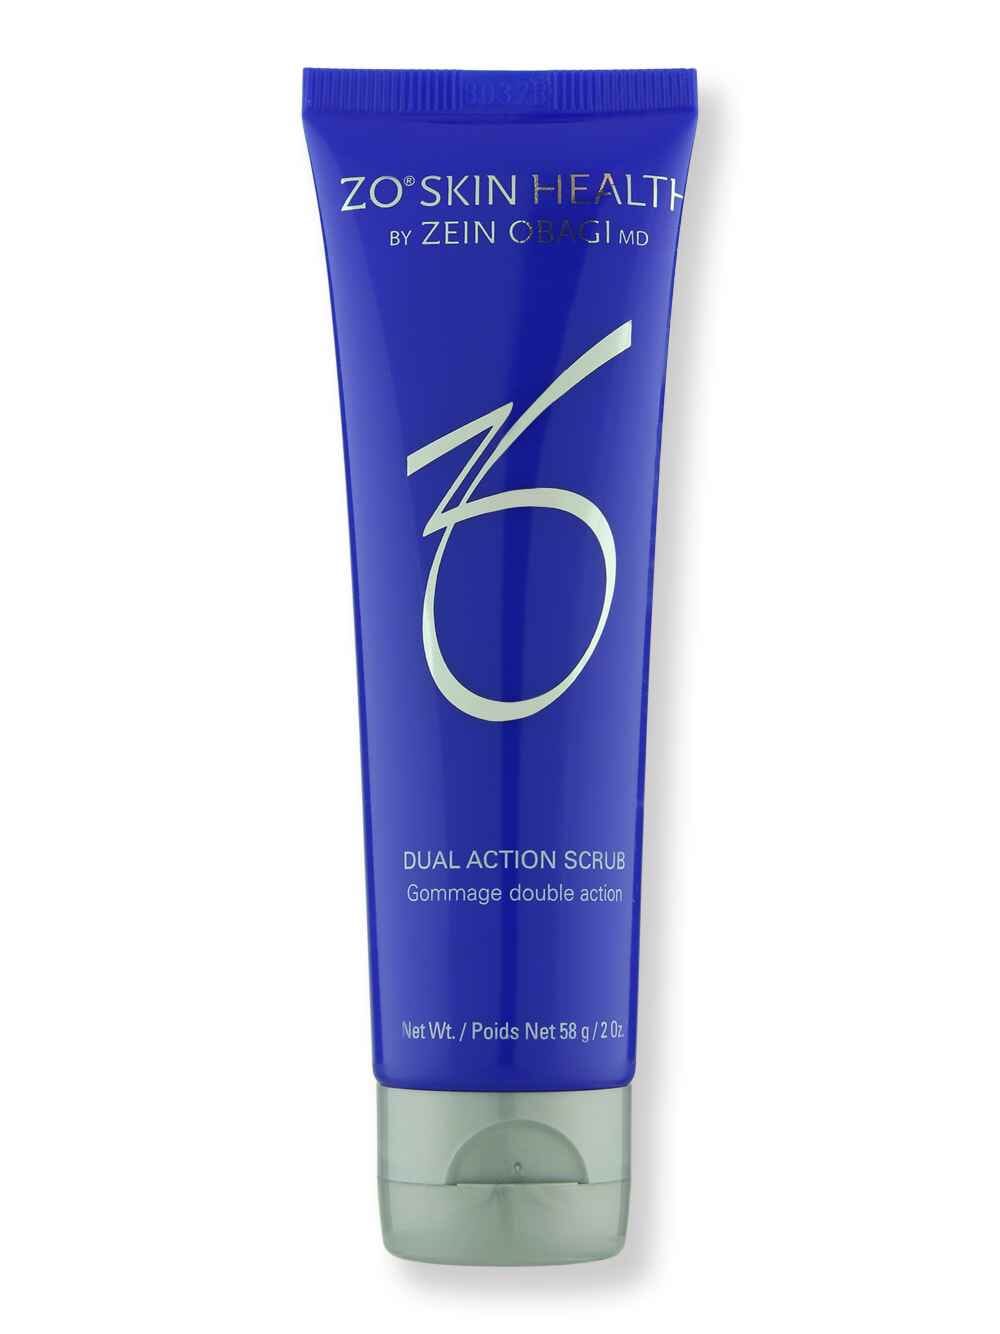 ZO Skin Health ZO Skin Health Dual Action Scrub 2 fl oz58 g Exfoliators & Peels 